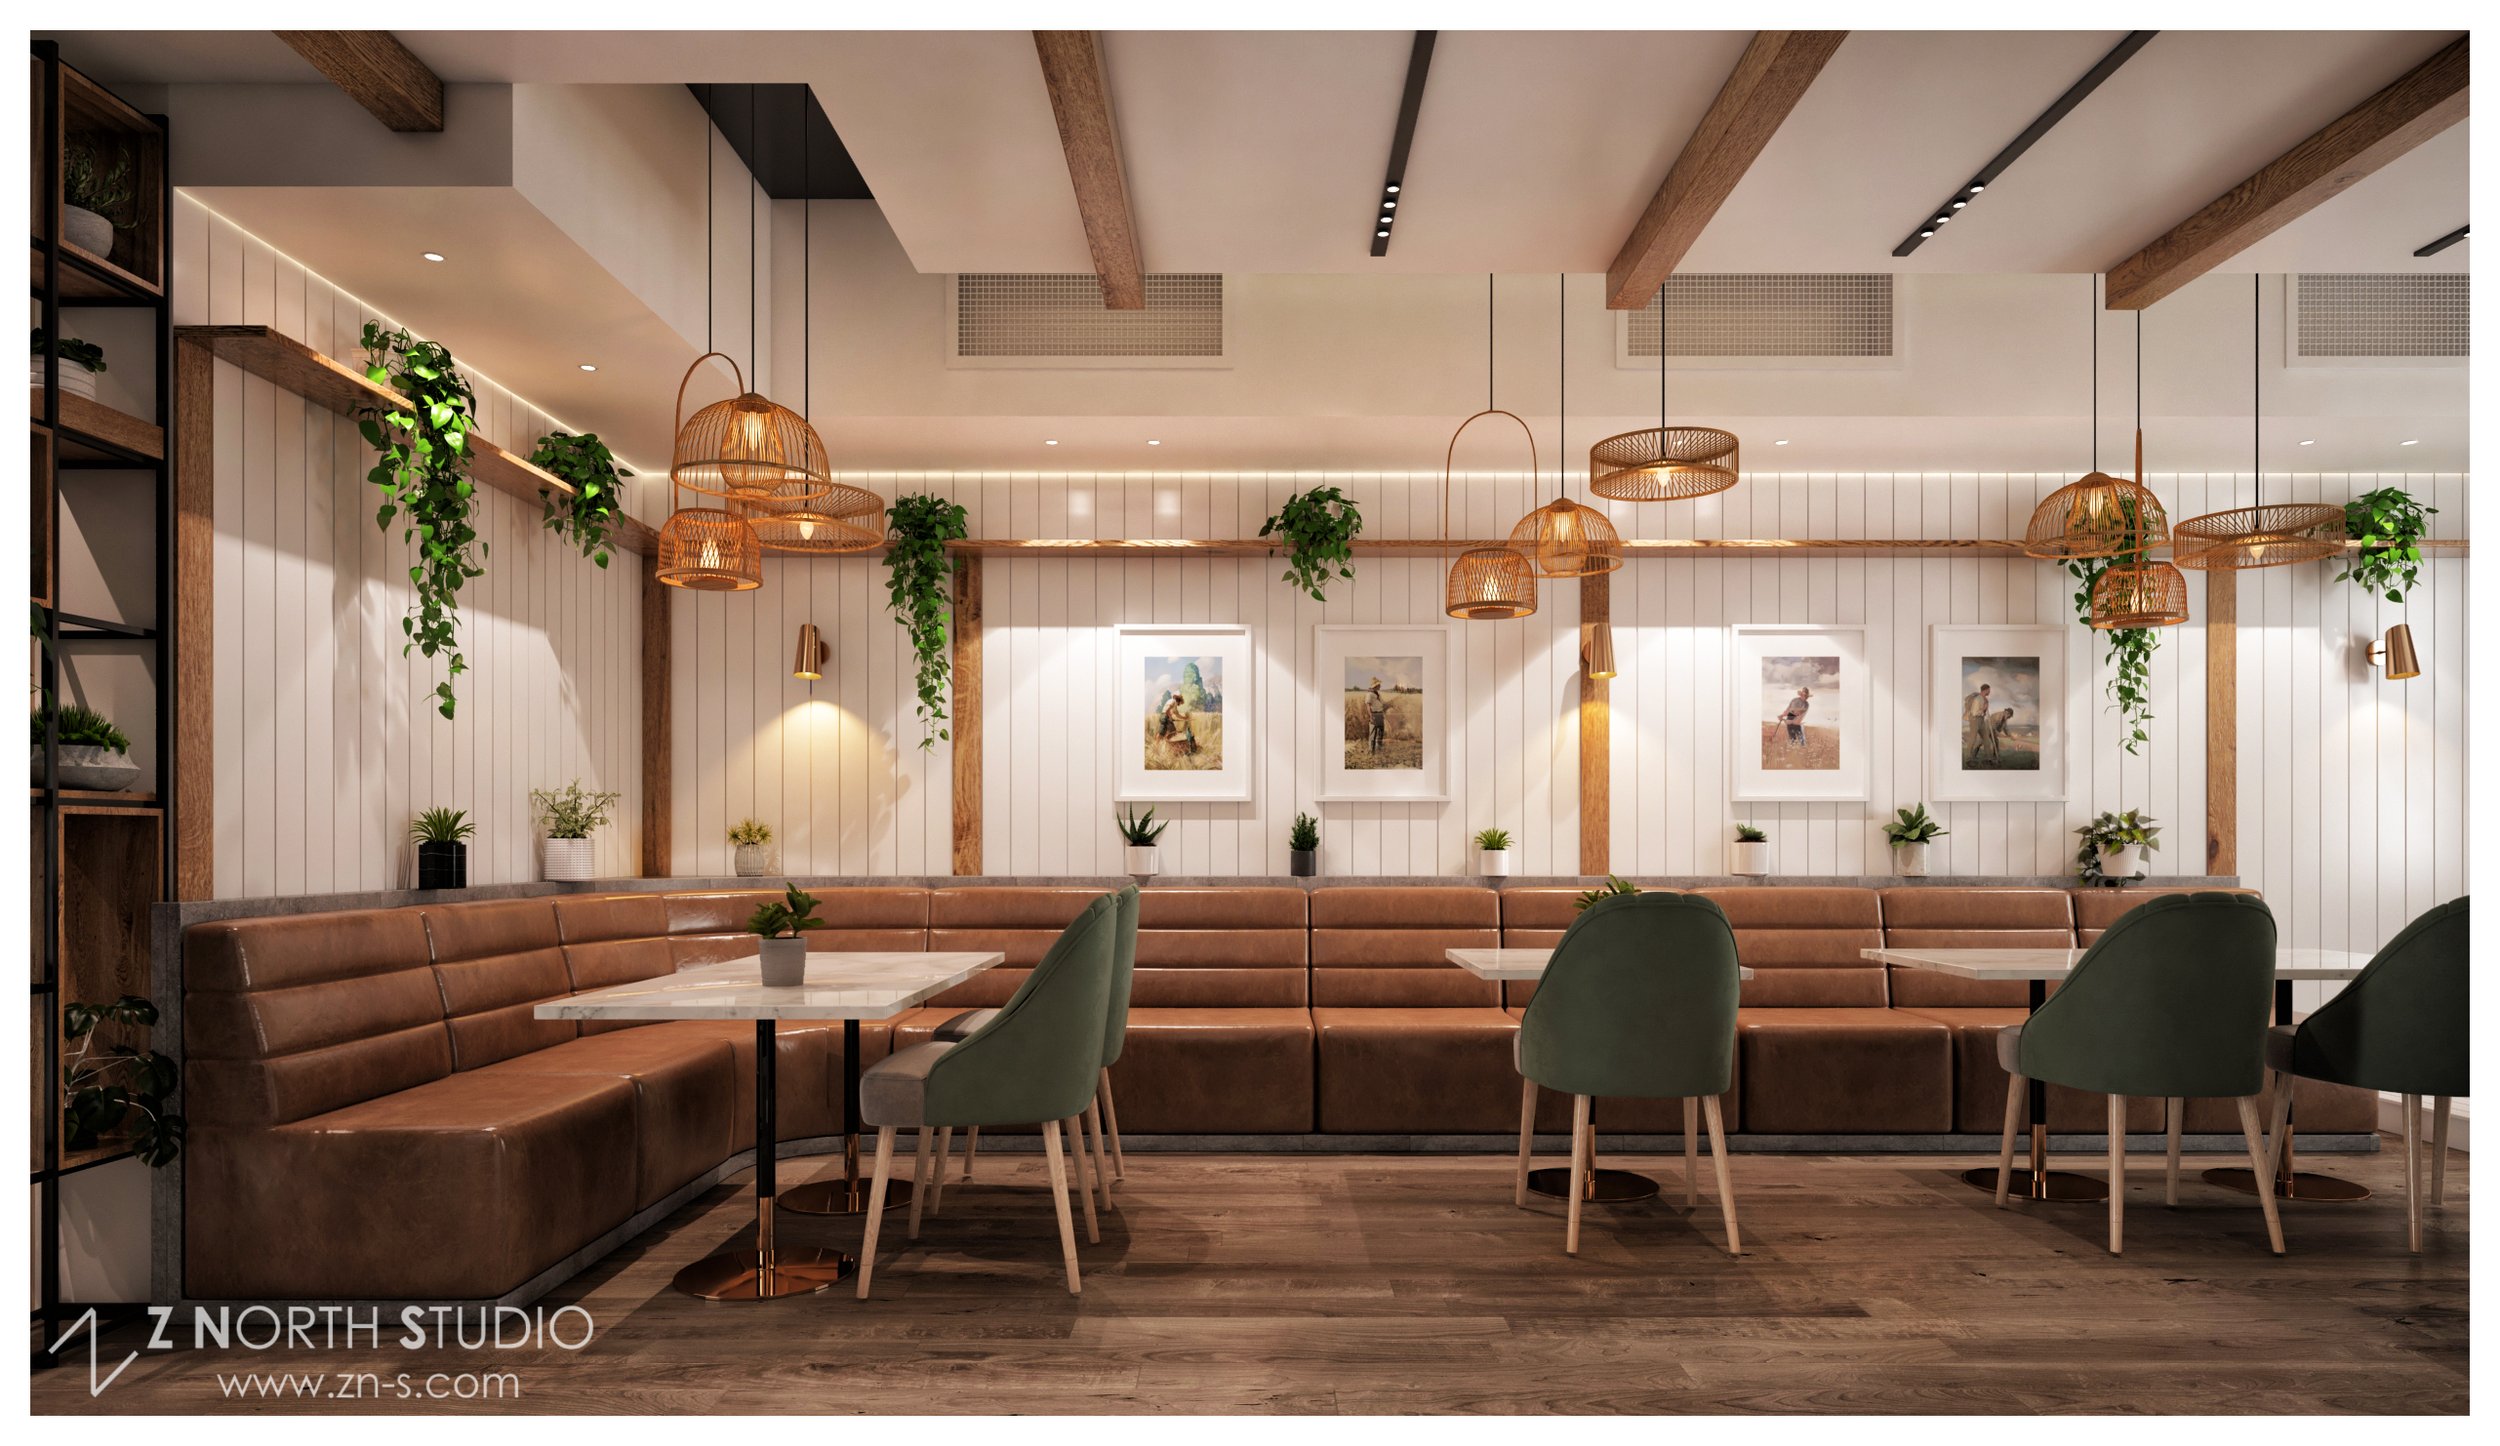 Resturant Design Omaris Music Bar & Agave Lounge Z North Studio 1st (1).jpg